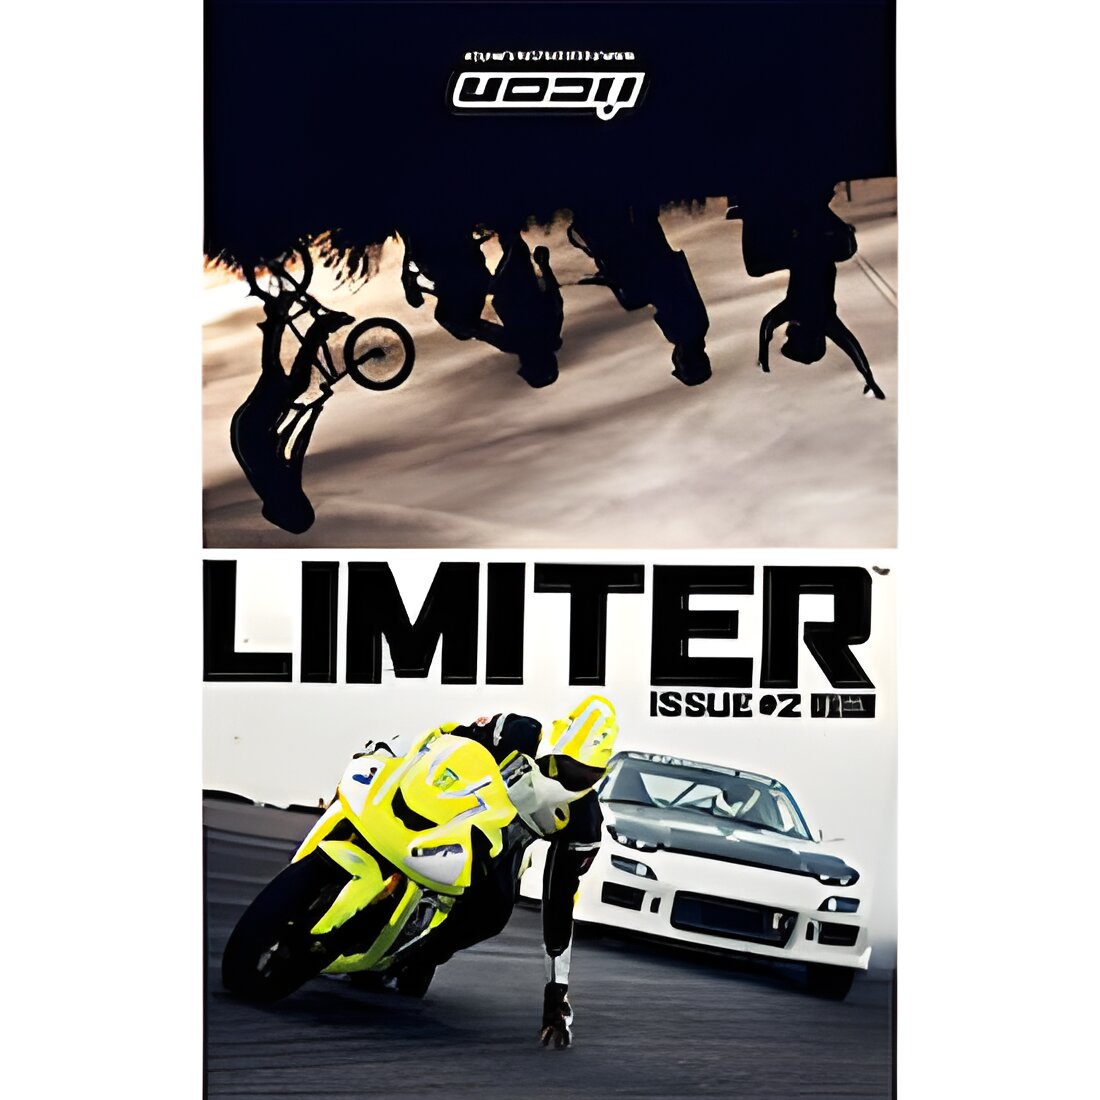 Free Print Copy Of Limiter Magazine